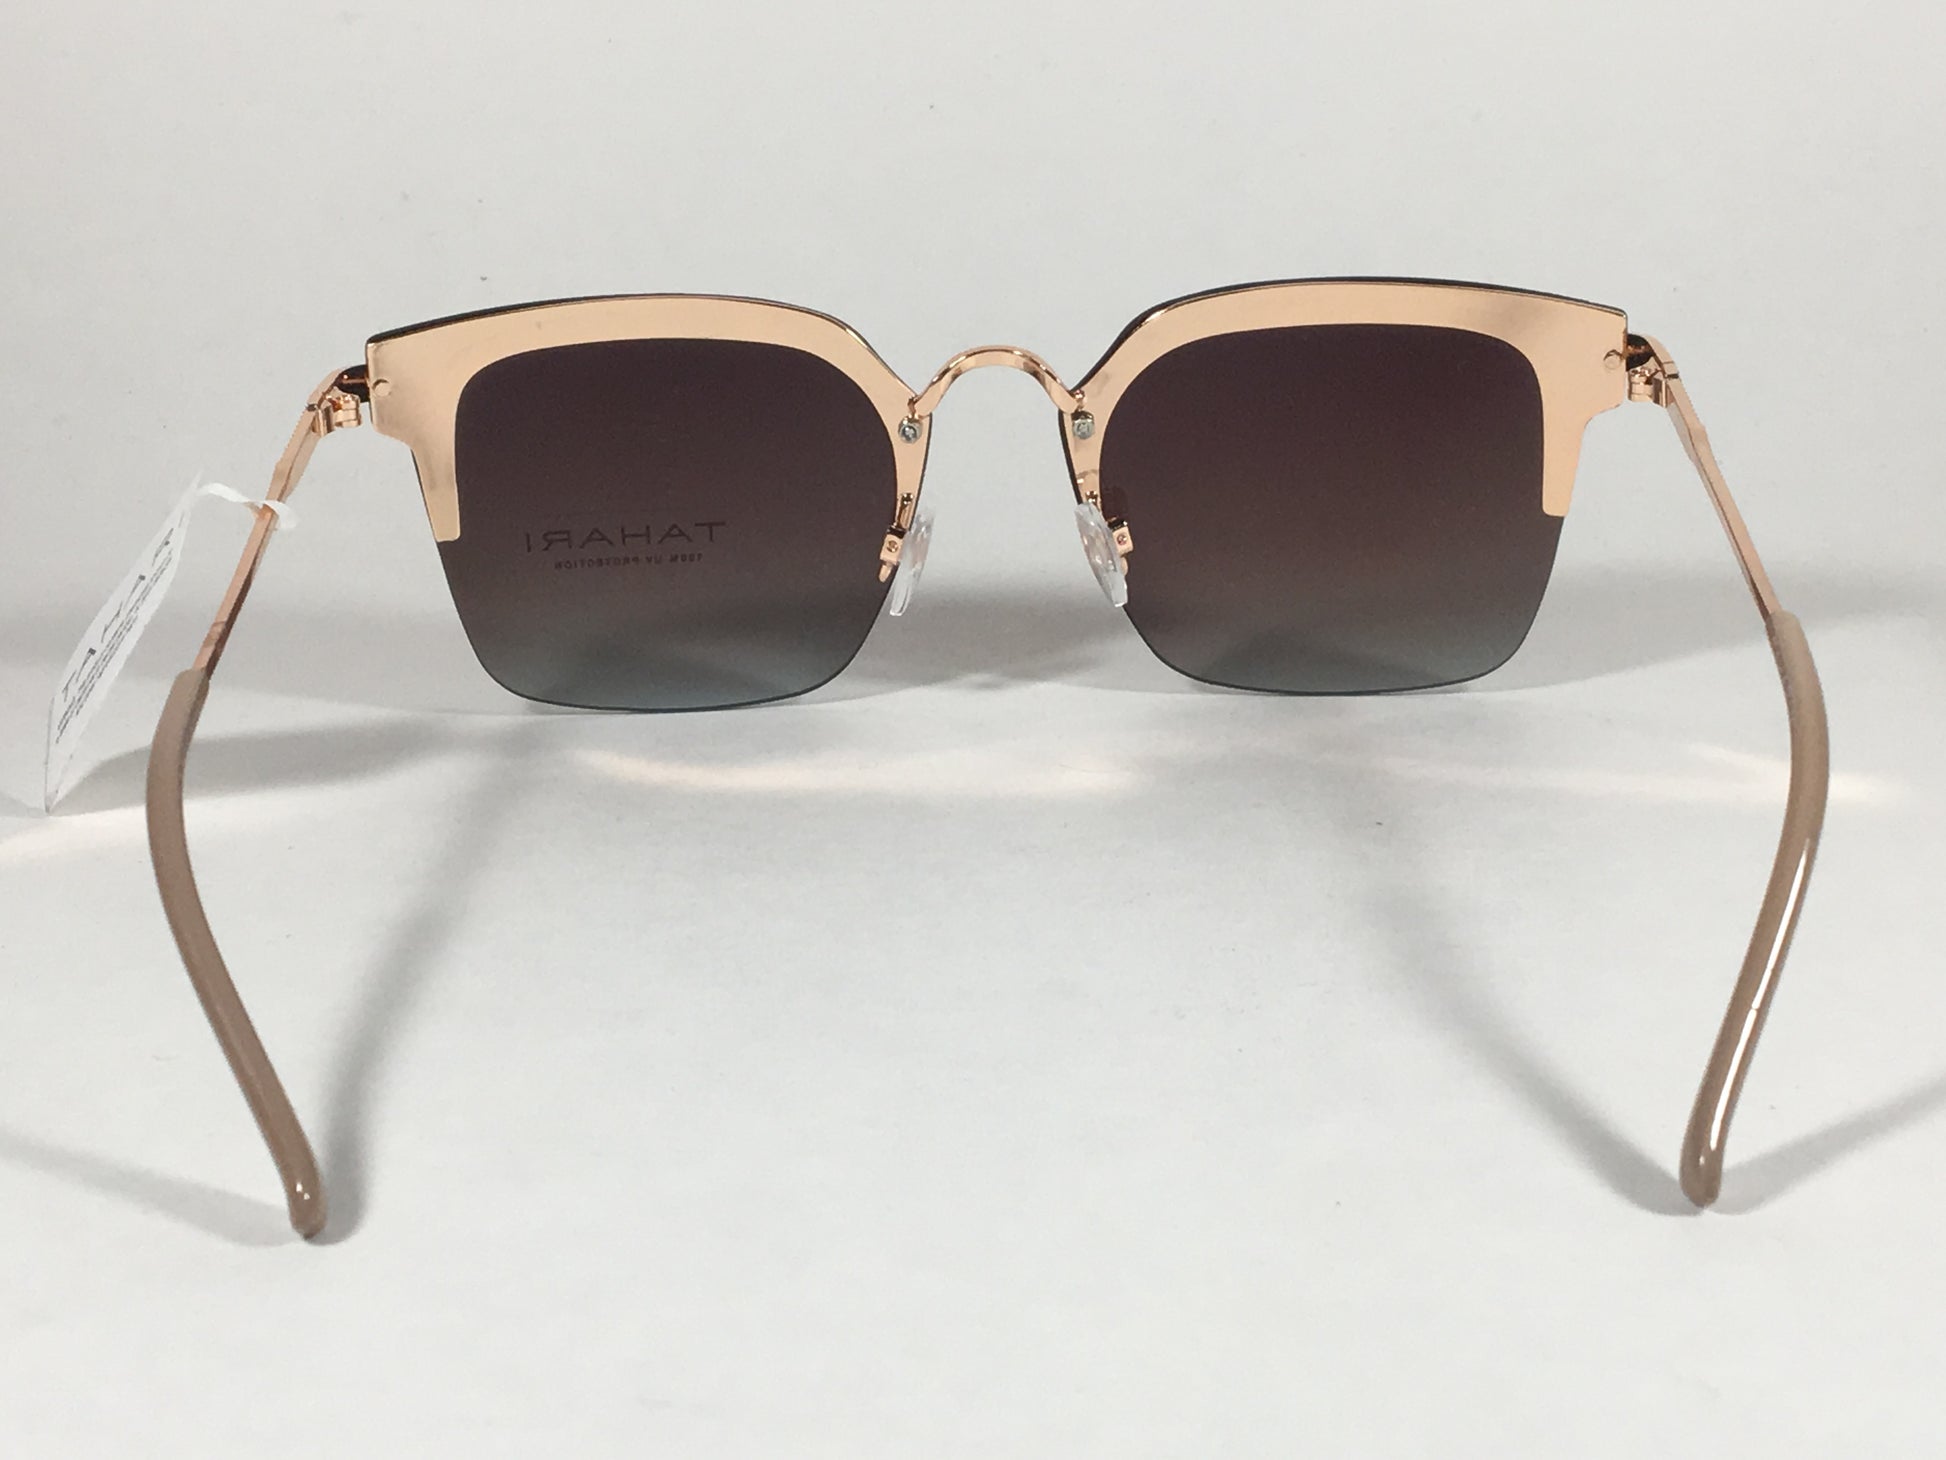 Tahari Rimless Square Sunglasses Rose Gold Nude Brown Gradient Lens Th697 Rgdnd - Sunglasses